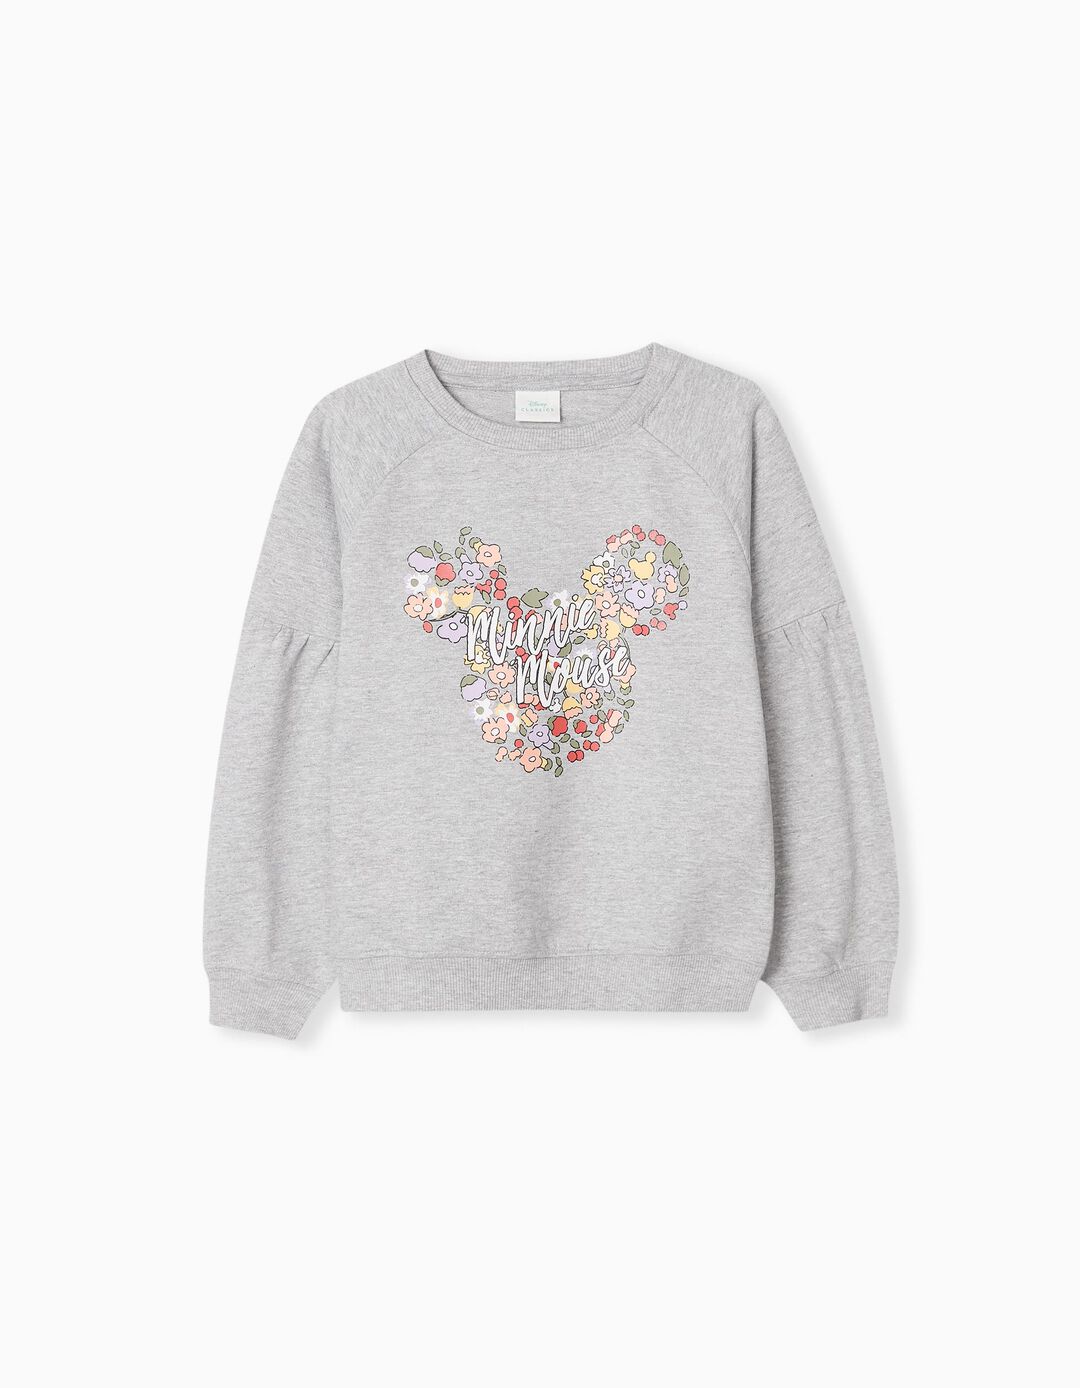 Disney' Sweatshirt, Girls, Light Grey